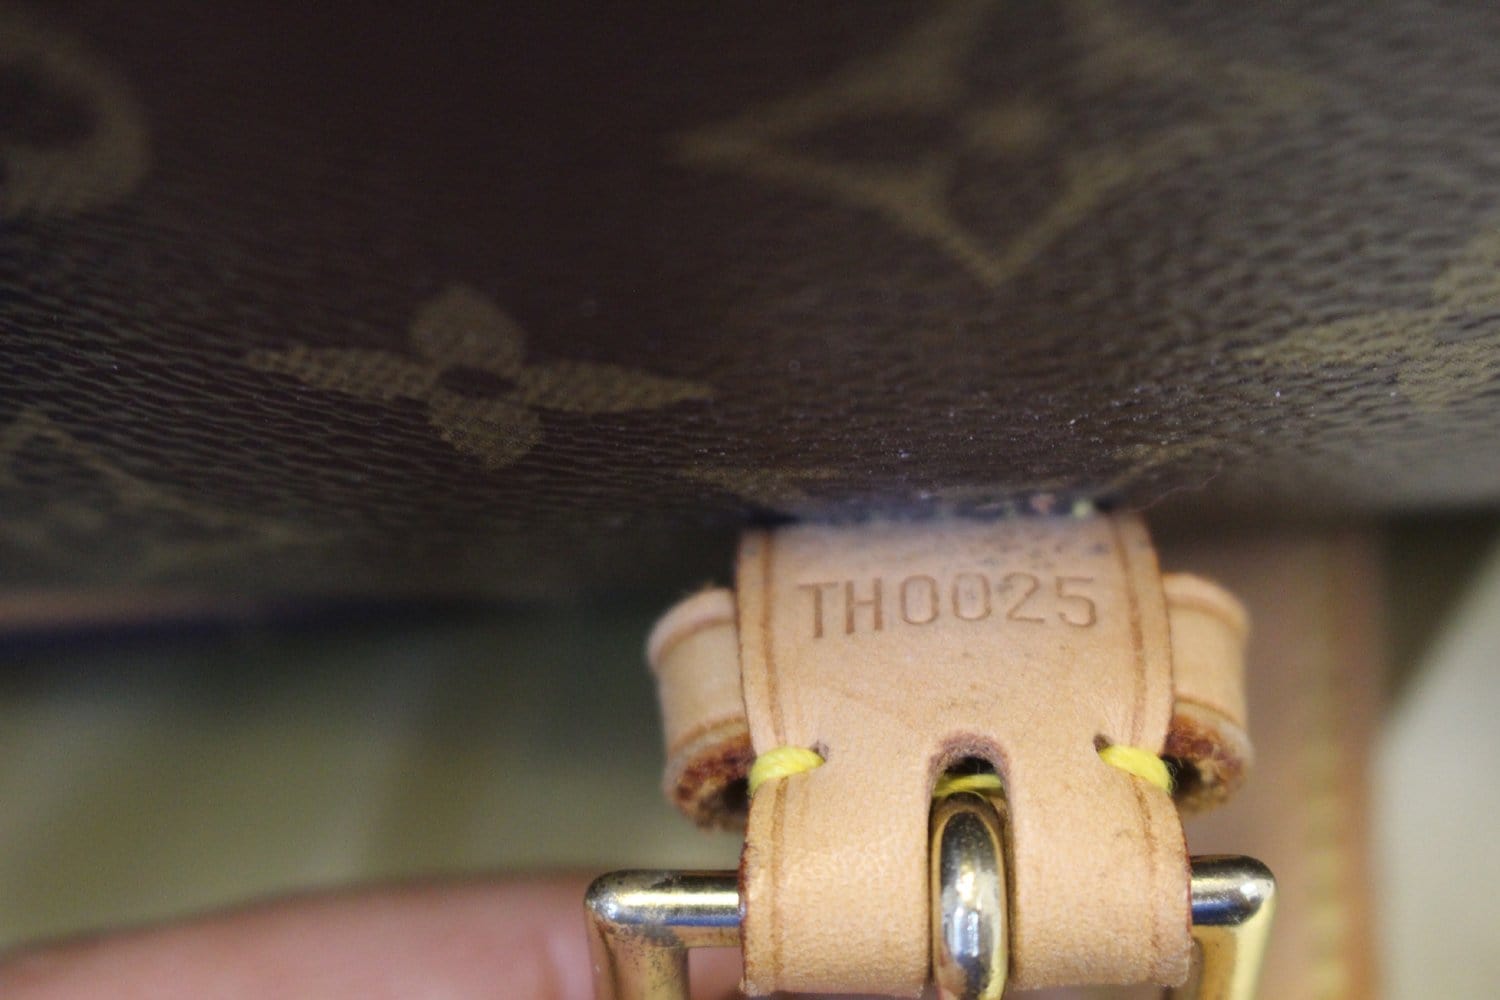 Louis Vuitton Sologne Crossbody monogram canvas – JOY'S CLASSY COLLECTION